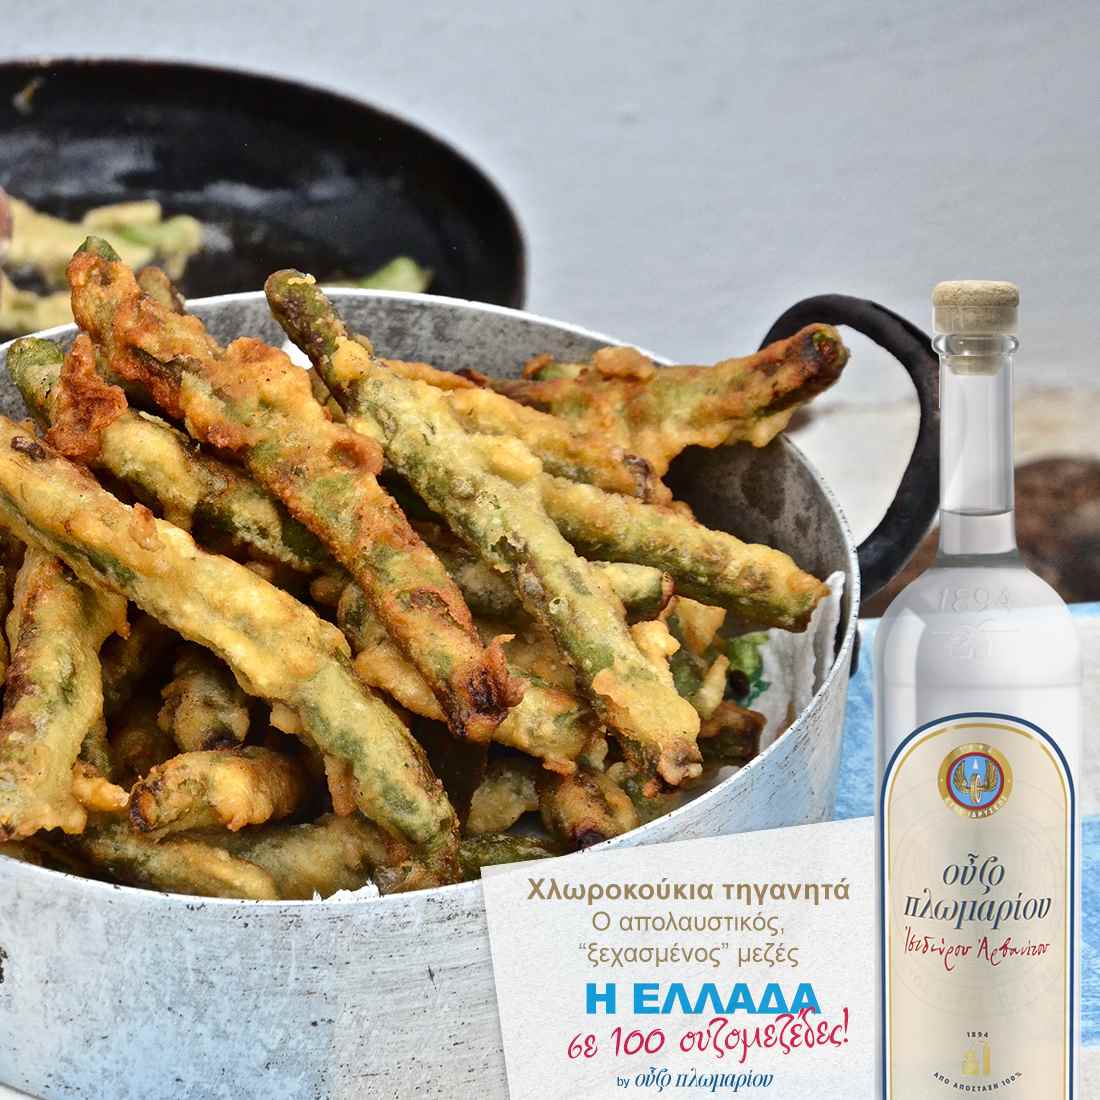 Xλωροκούκια τηγανητά - Ουζομεζέδες - Greek Gastronomy Guide